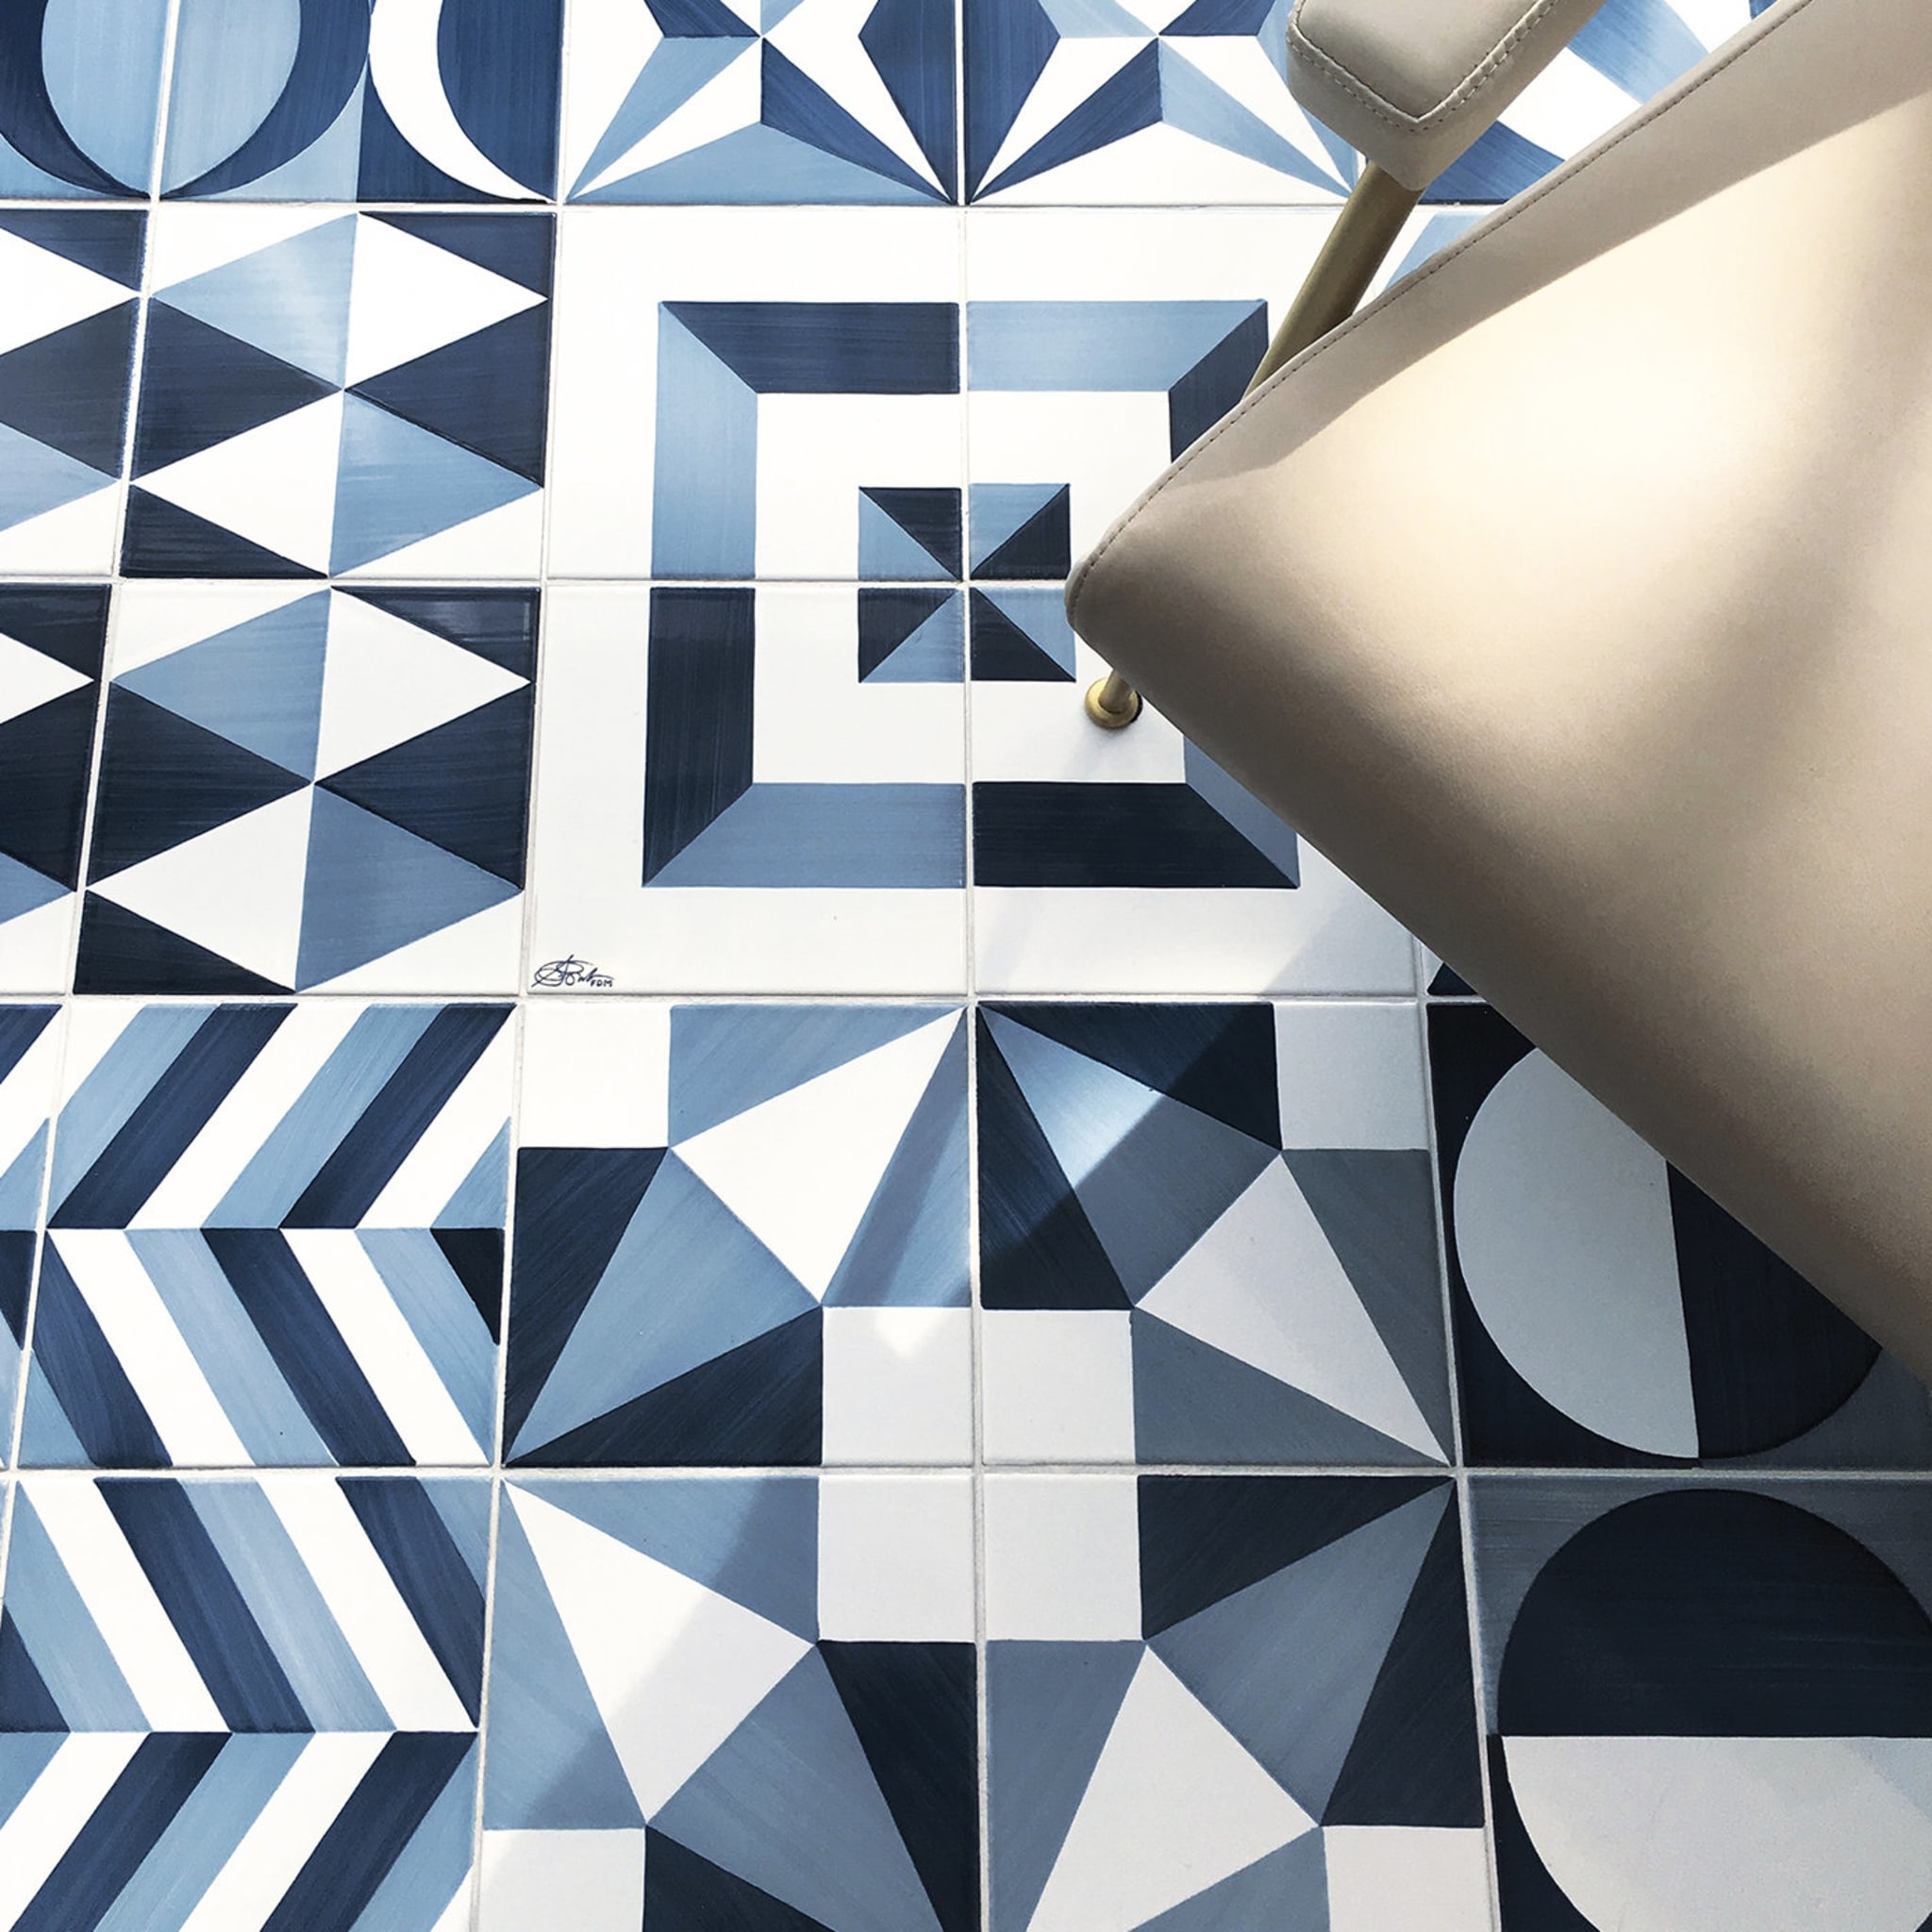 Set of 25 Tiles Blu Ponti Decoration Type 1 by Gio Ponti - Alternative view 1